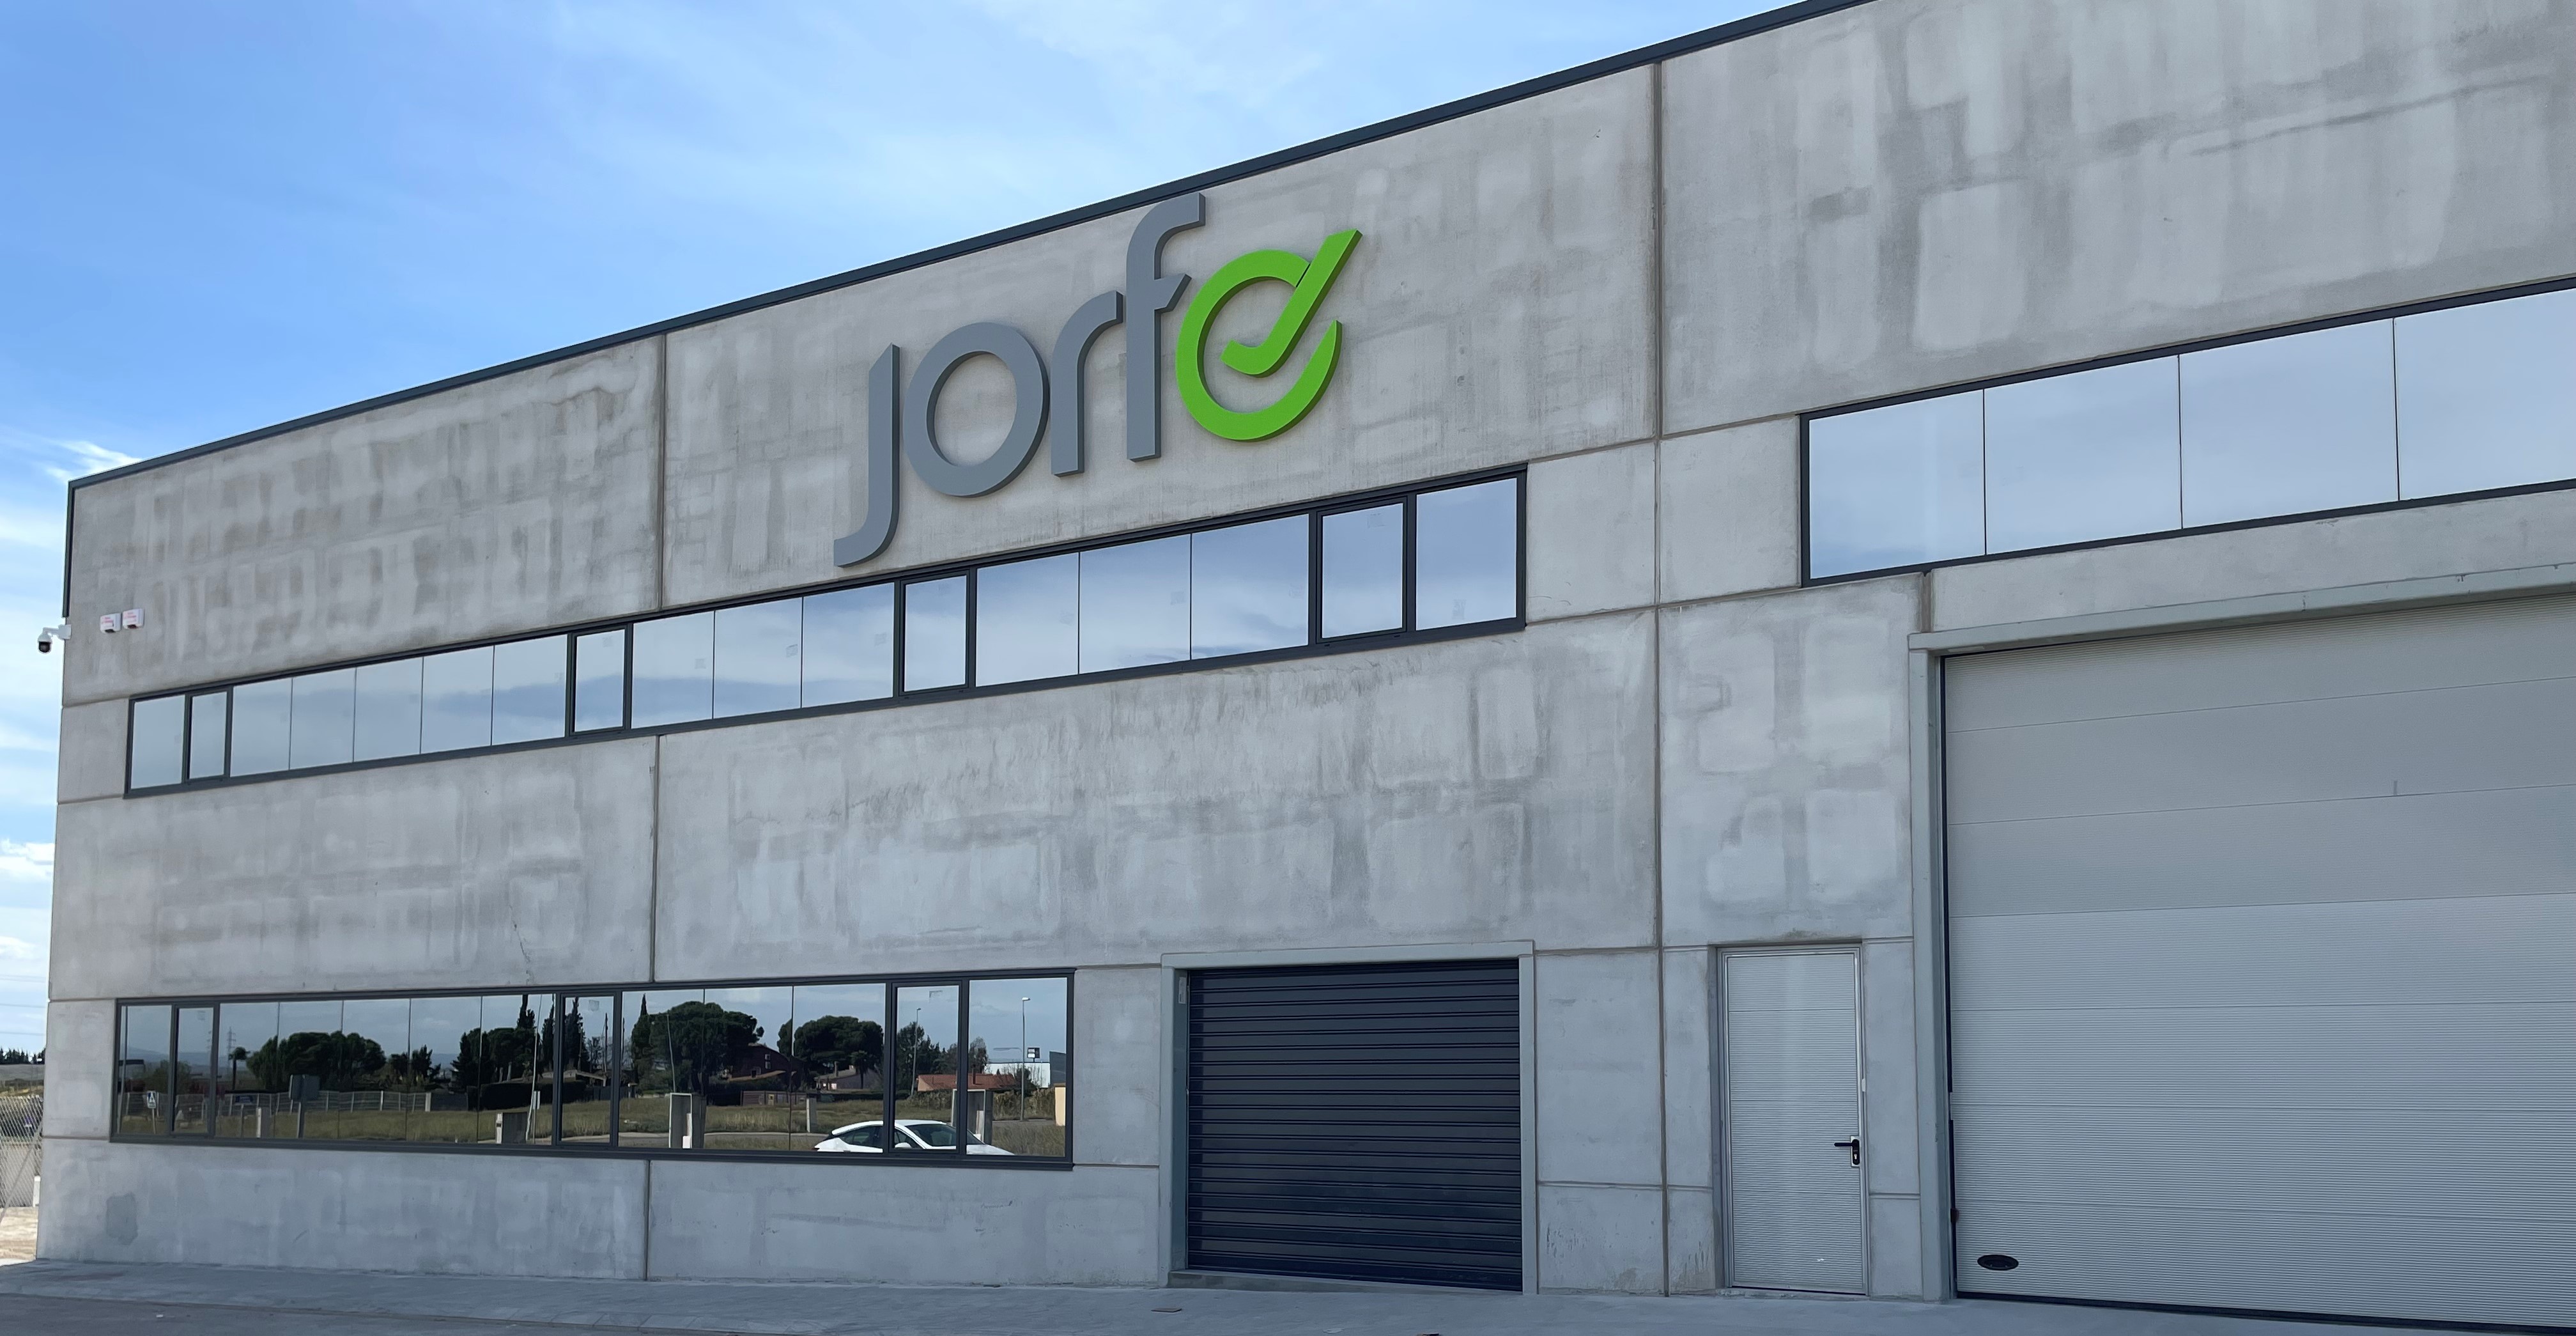 façana nova nau Jorfe a Torrefarrera